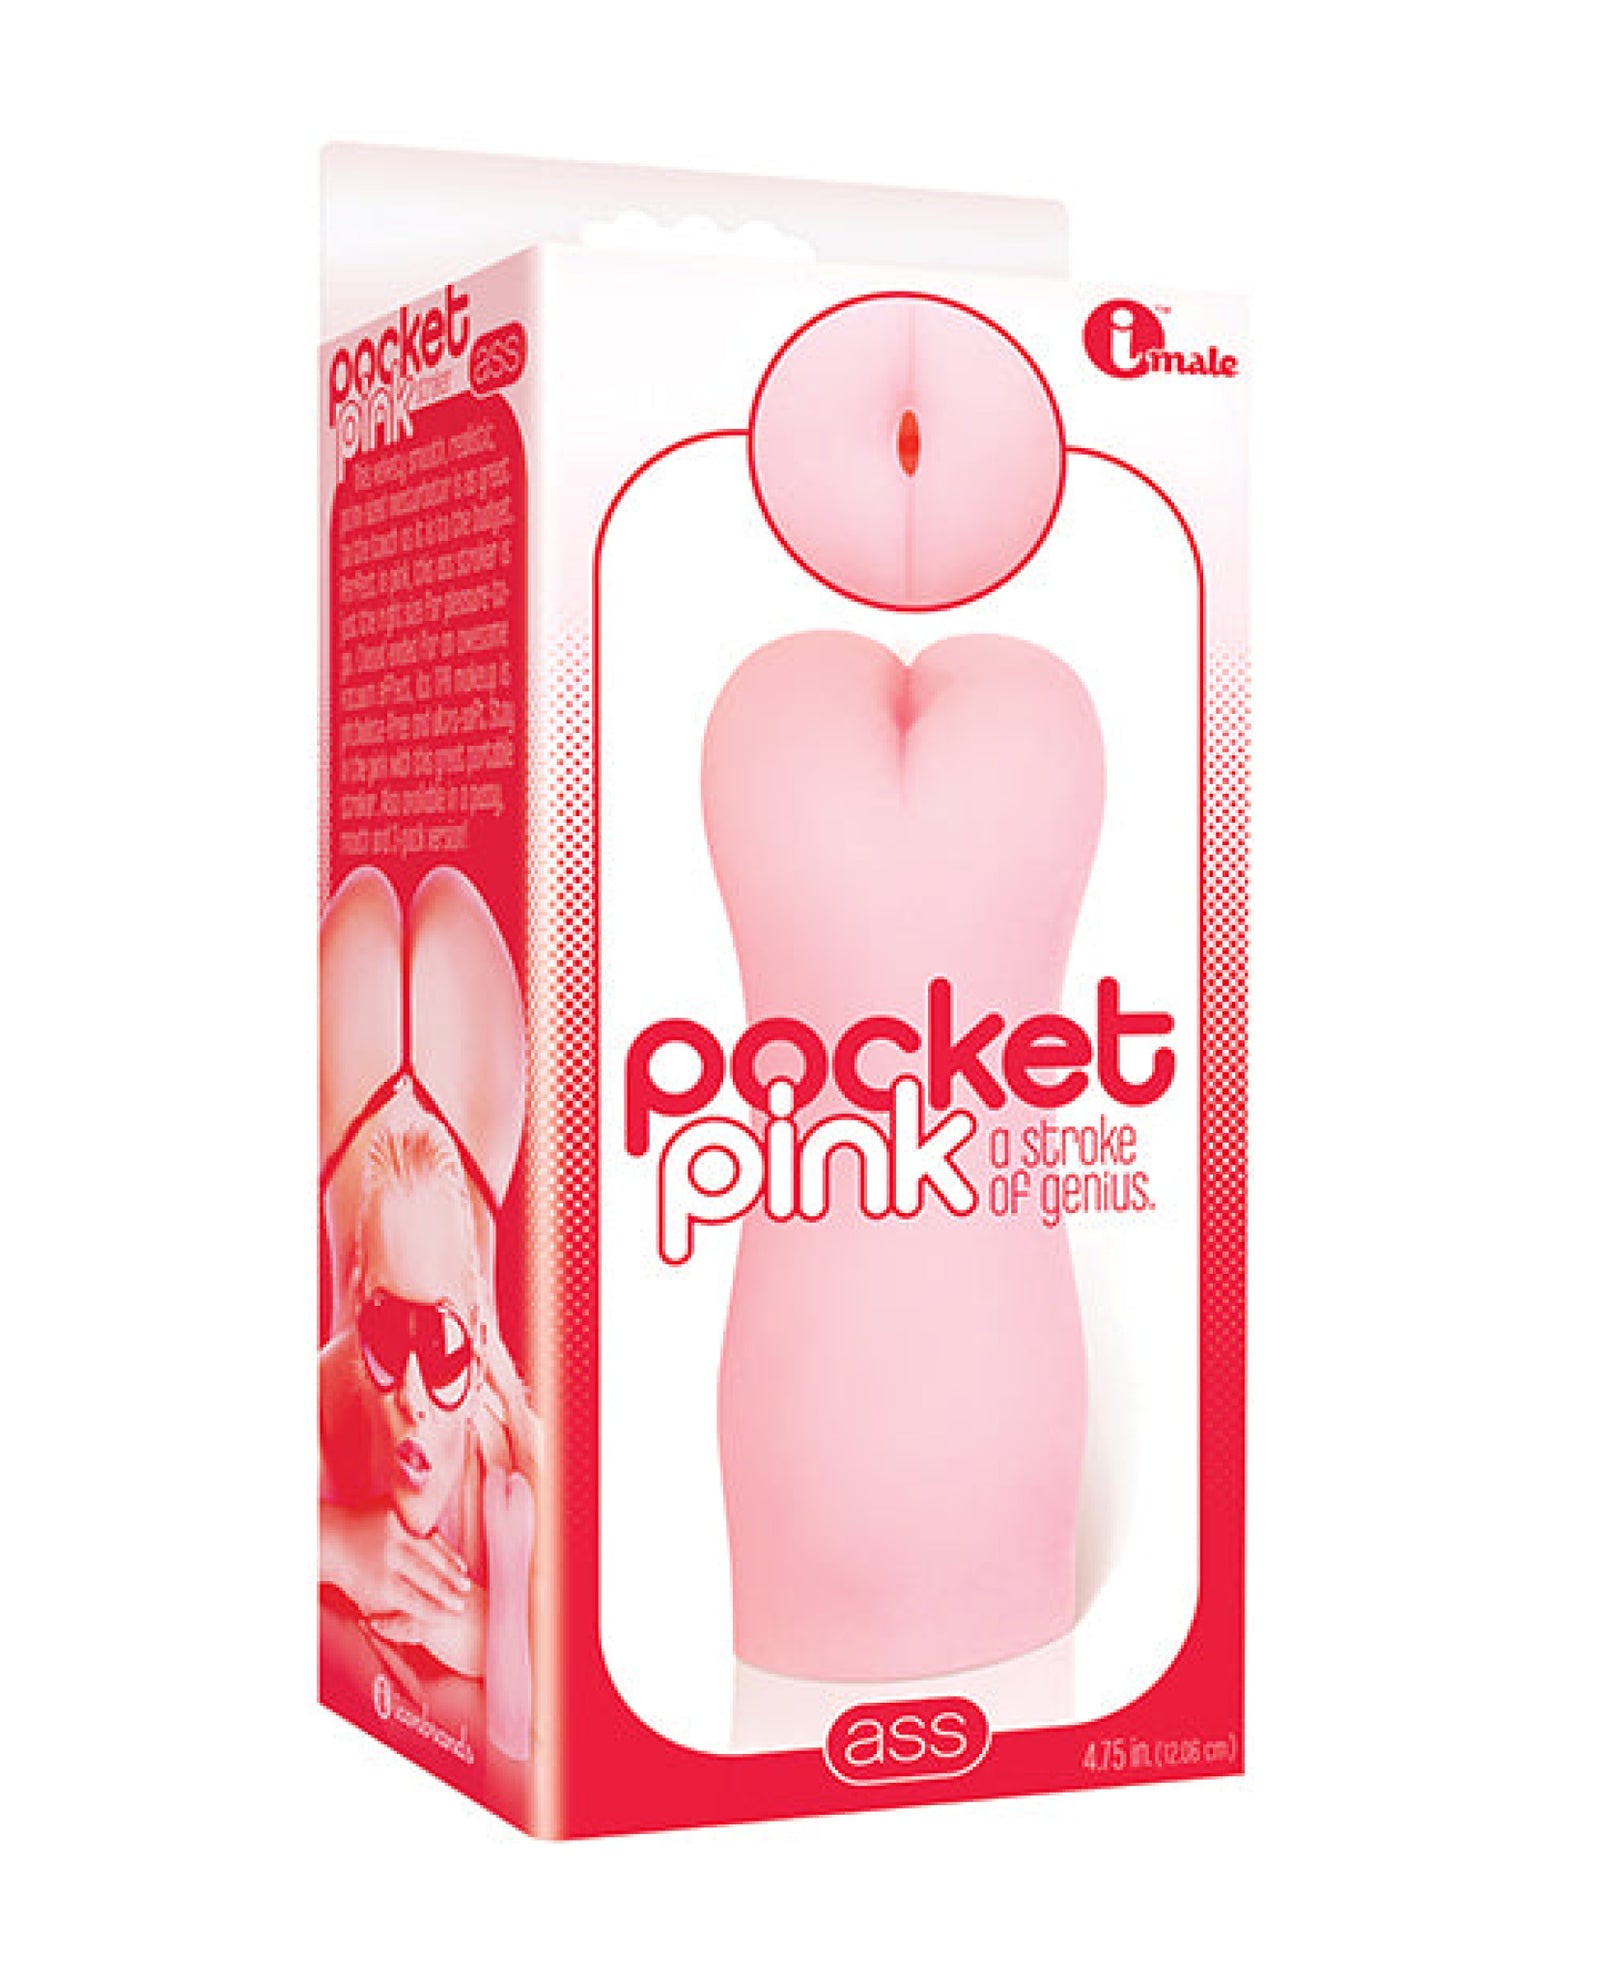 The 9's Pocket Pink Mini Ass Masturbator Icon